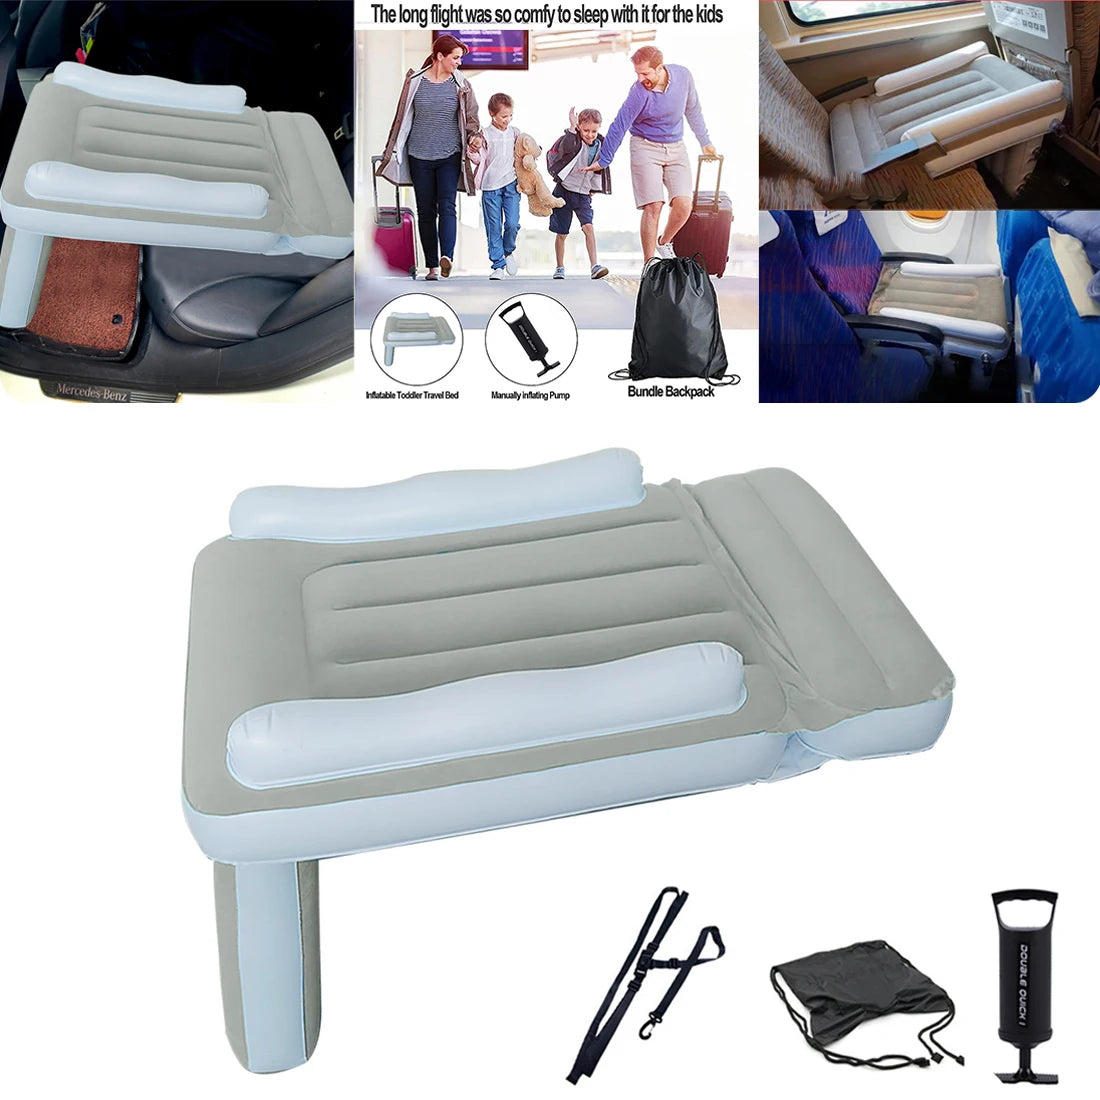 Inflatable Baby Airplane Mattress Travel Bed Sleep Air Matt Highspeed Railway Air Cushion Car Camping Interior Accessory